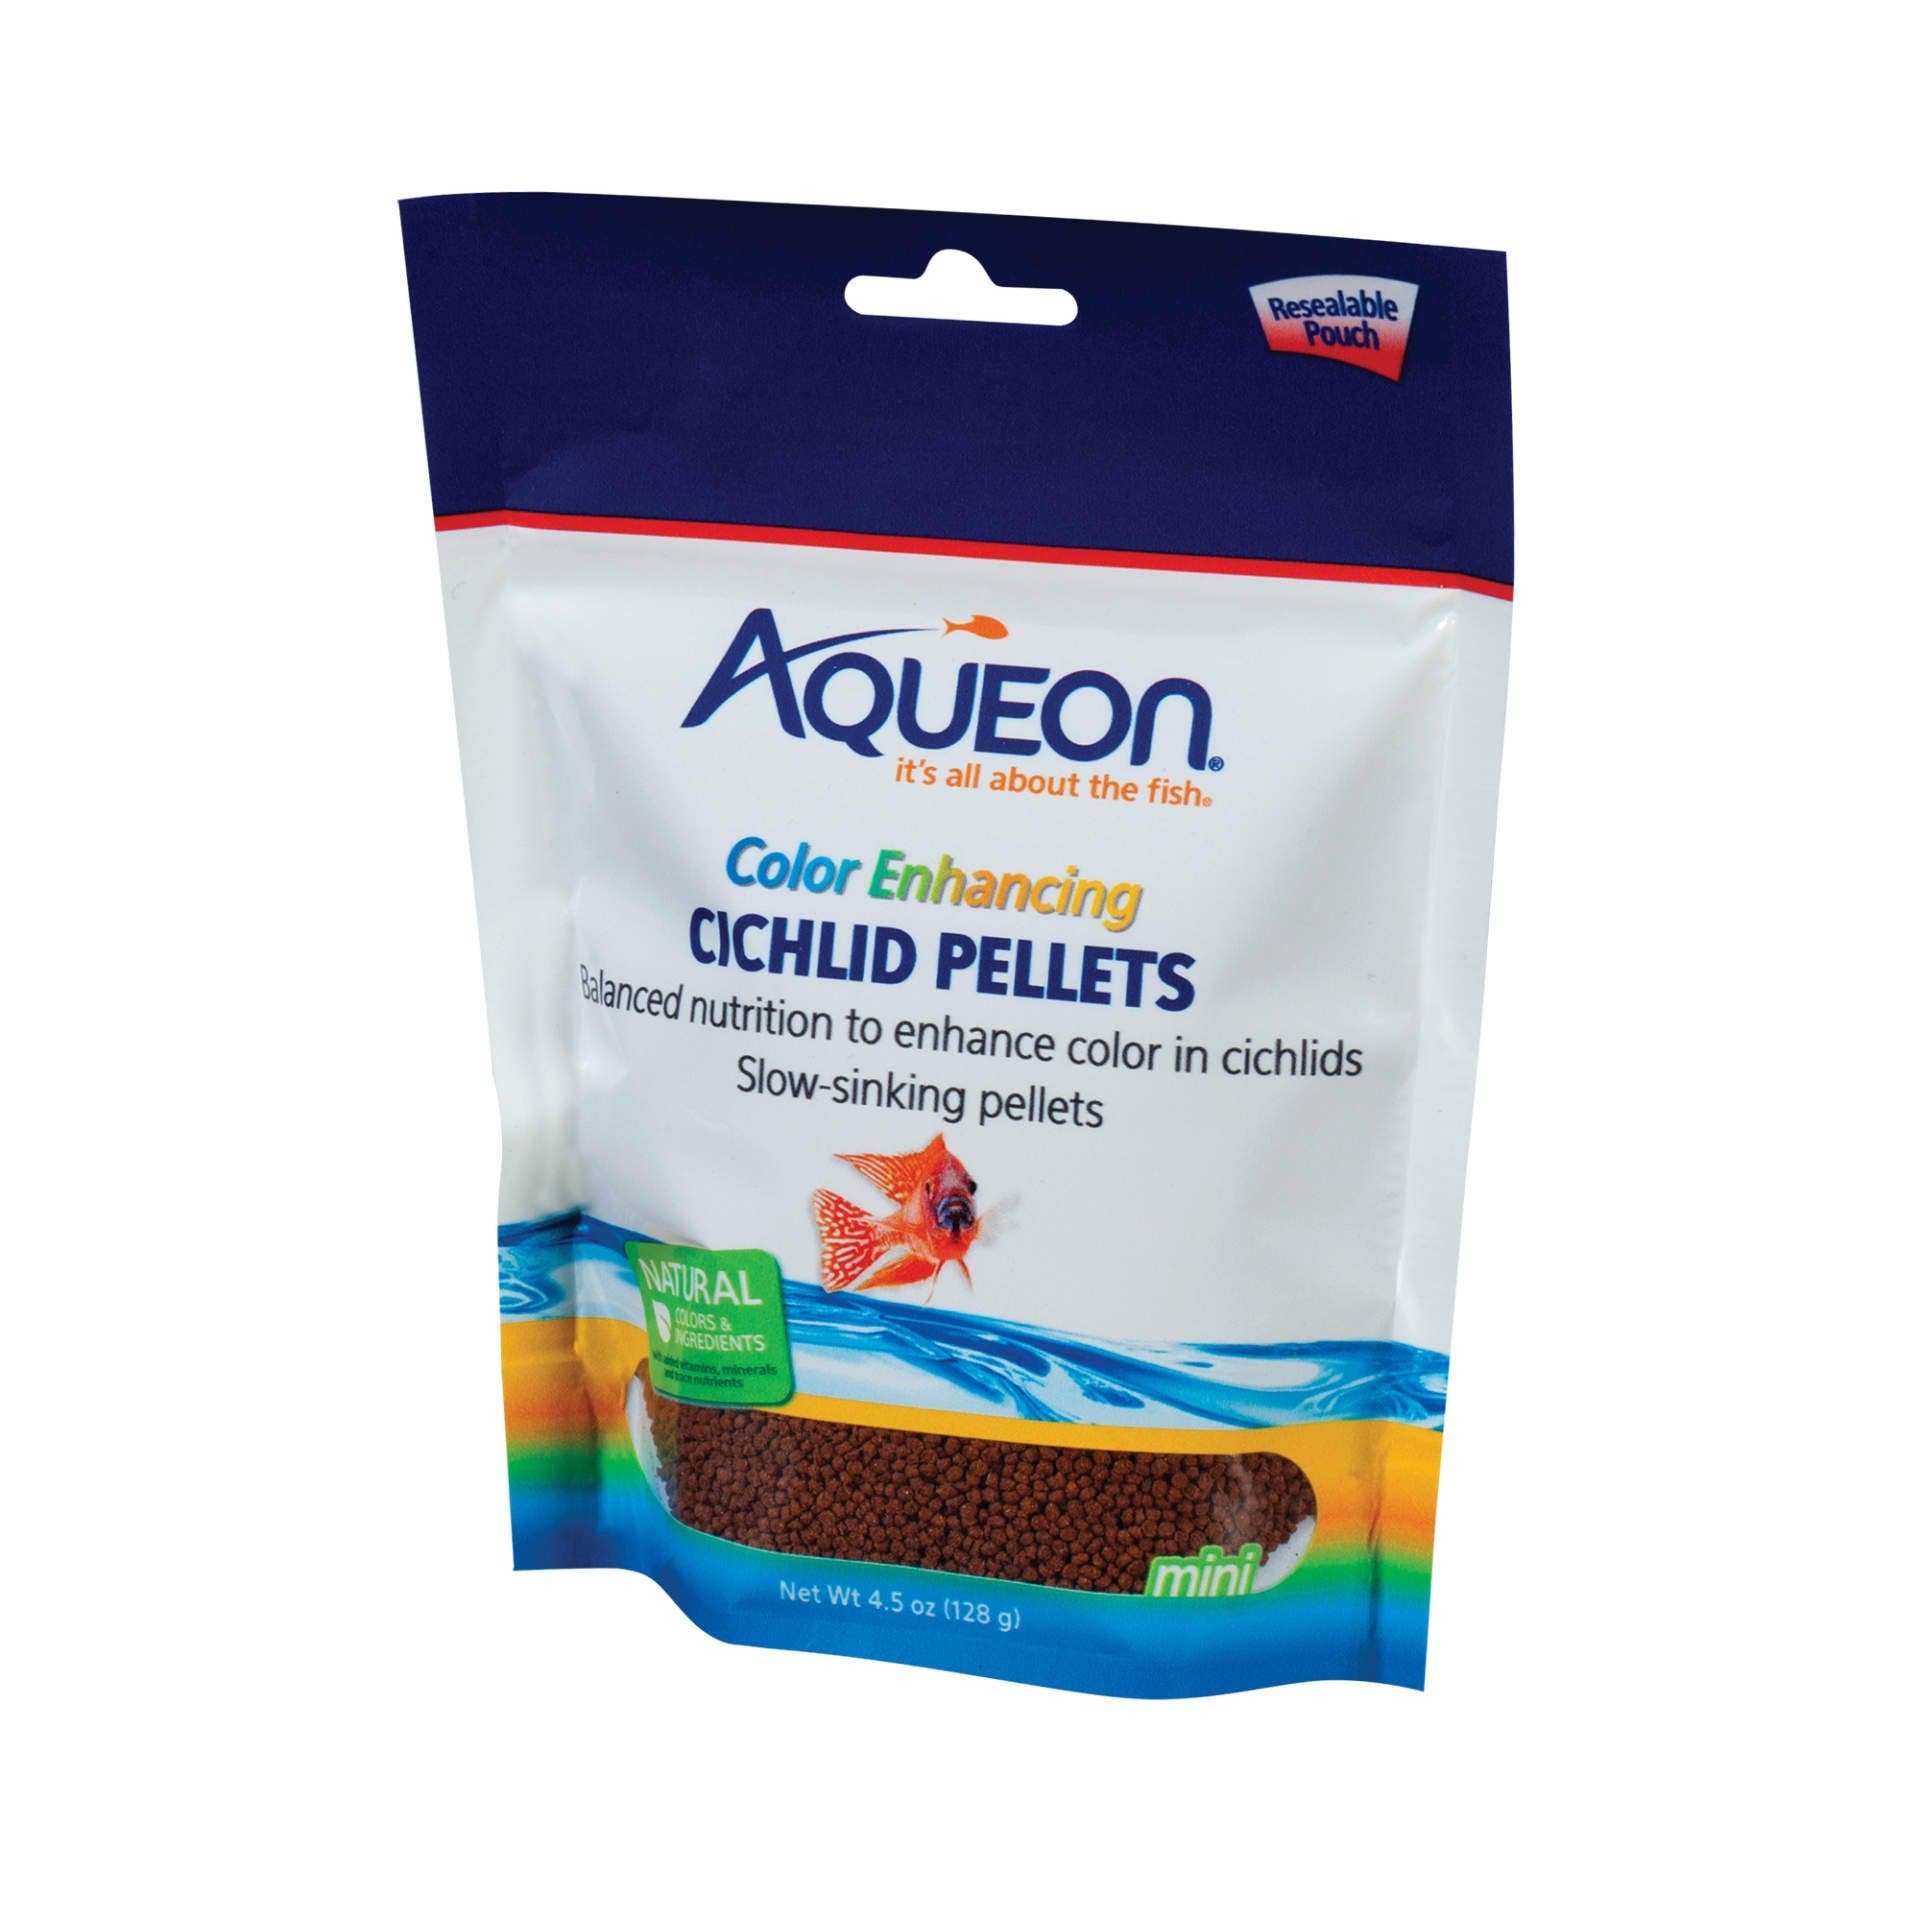 Aqueon cichlid pellets coloring enhancing 4.5oz fish